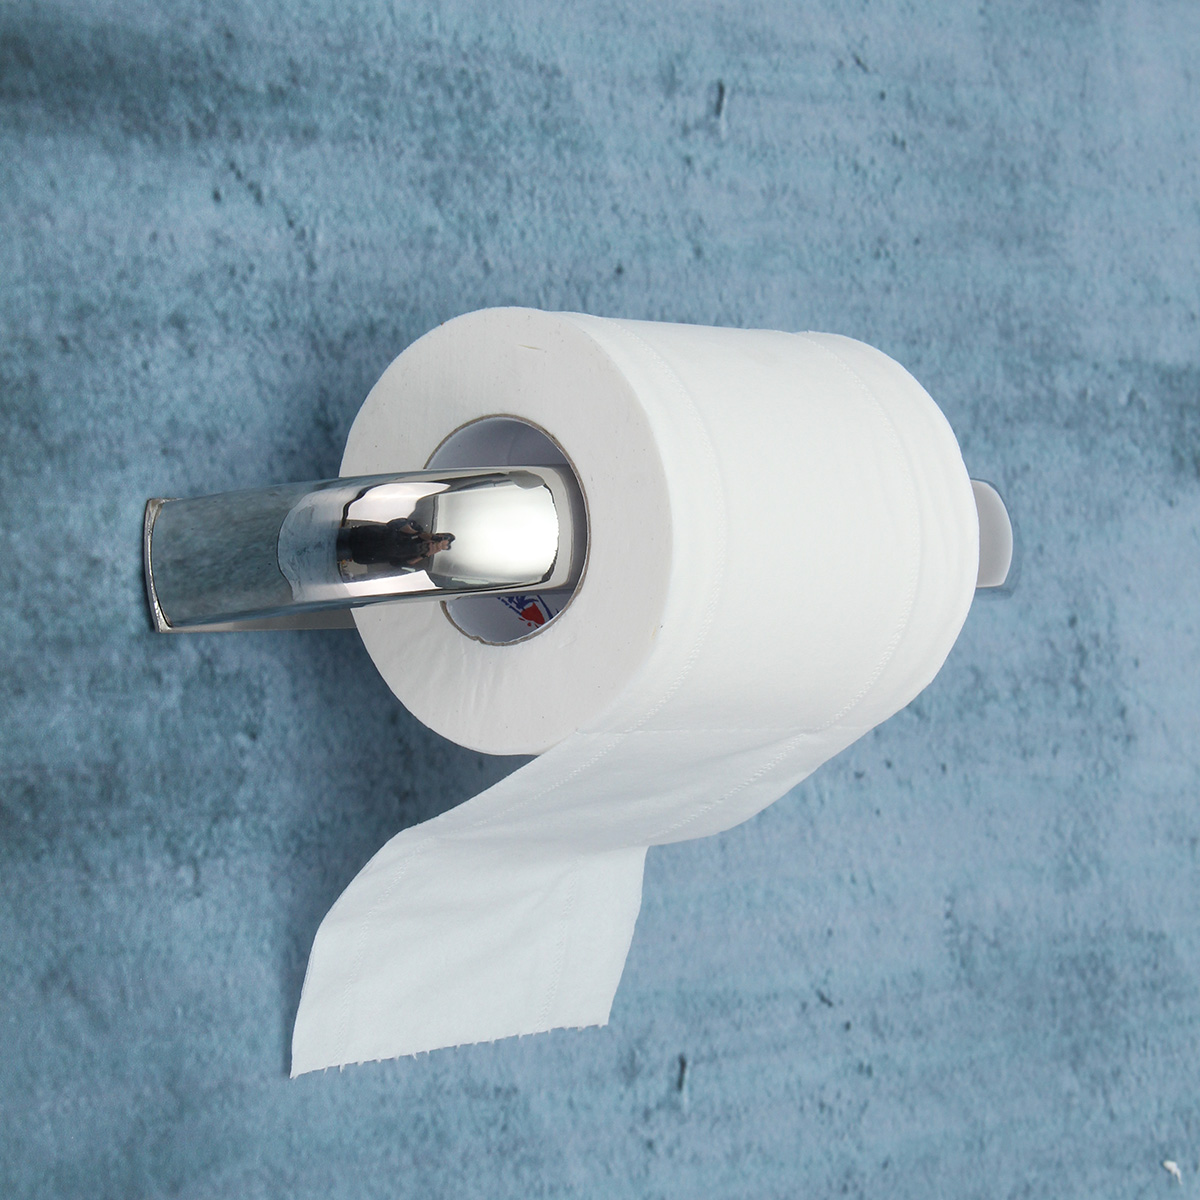 Stainless-Steel-Bathroom-Paper-Shelf-Holder-Tissue-Roll-Rack-Stand-Brecket-Wall-Mount-1333052-6